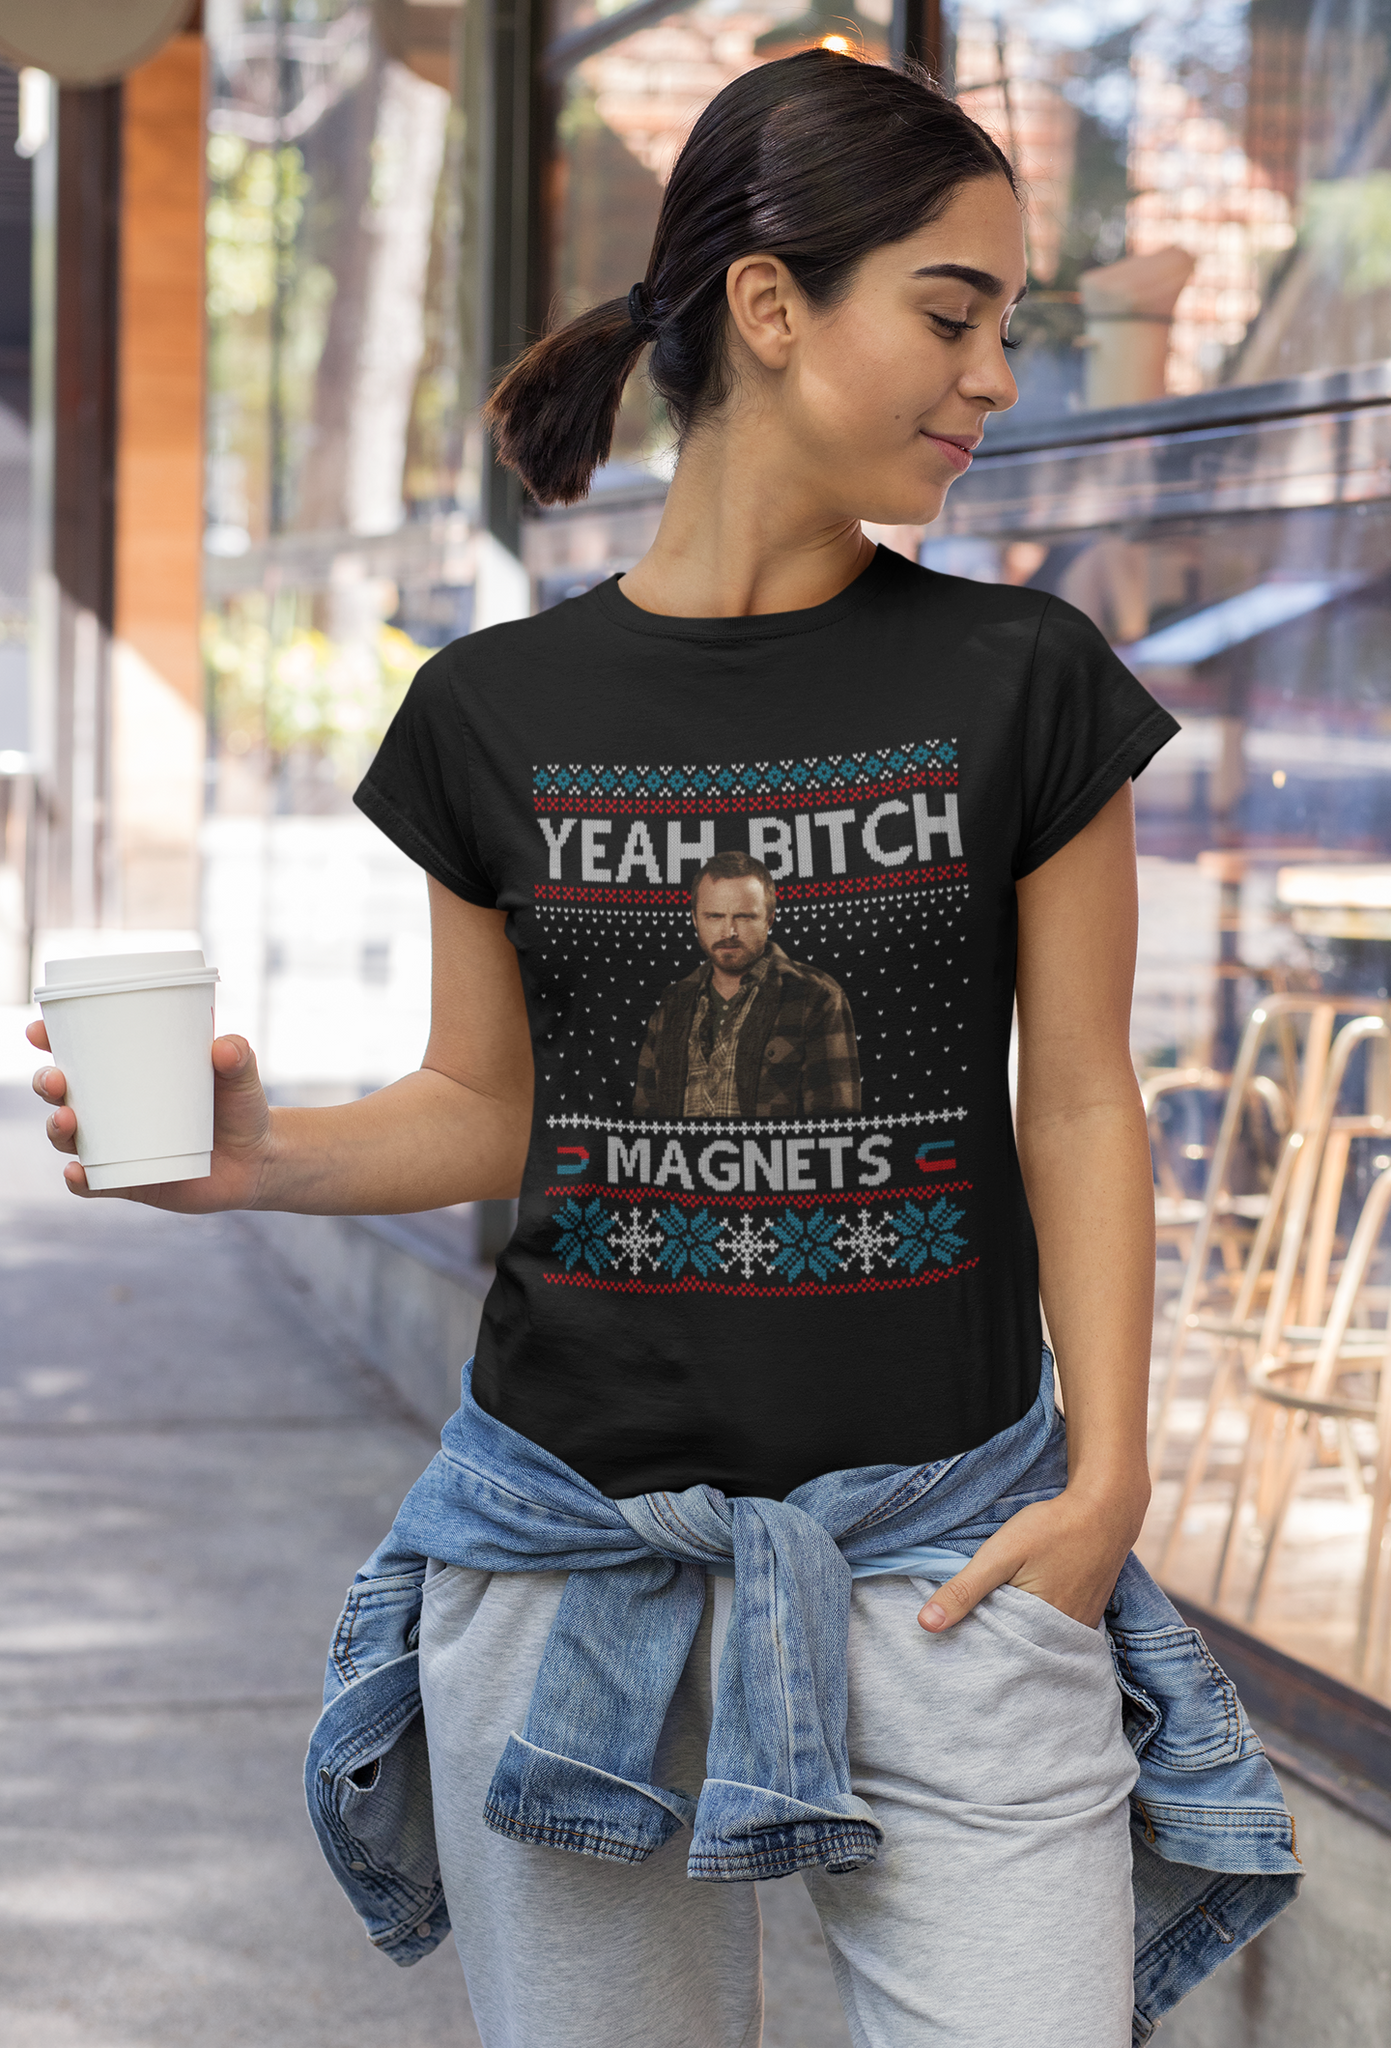 Breaking Bad Ugly Sweater Tshirt, Jesse Pinkman T Shirt, Yeah Bitch Magnets T Shirt, Christmas Gifts